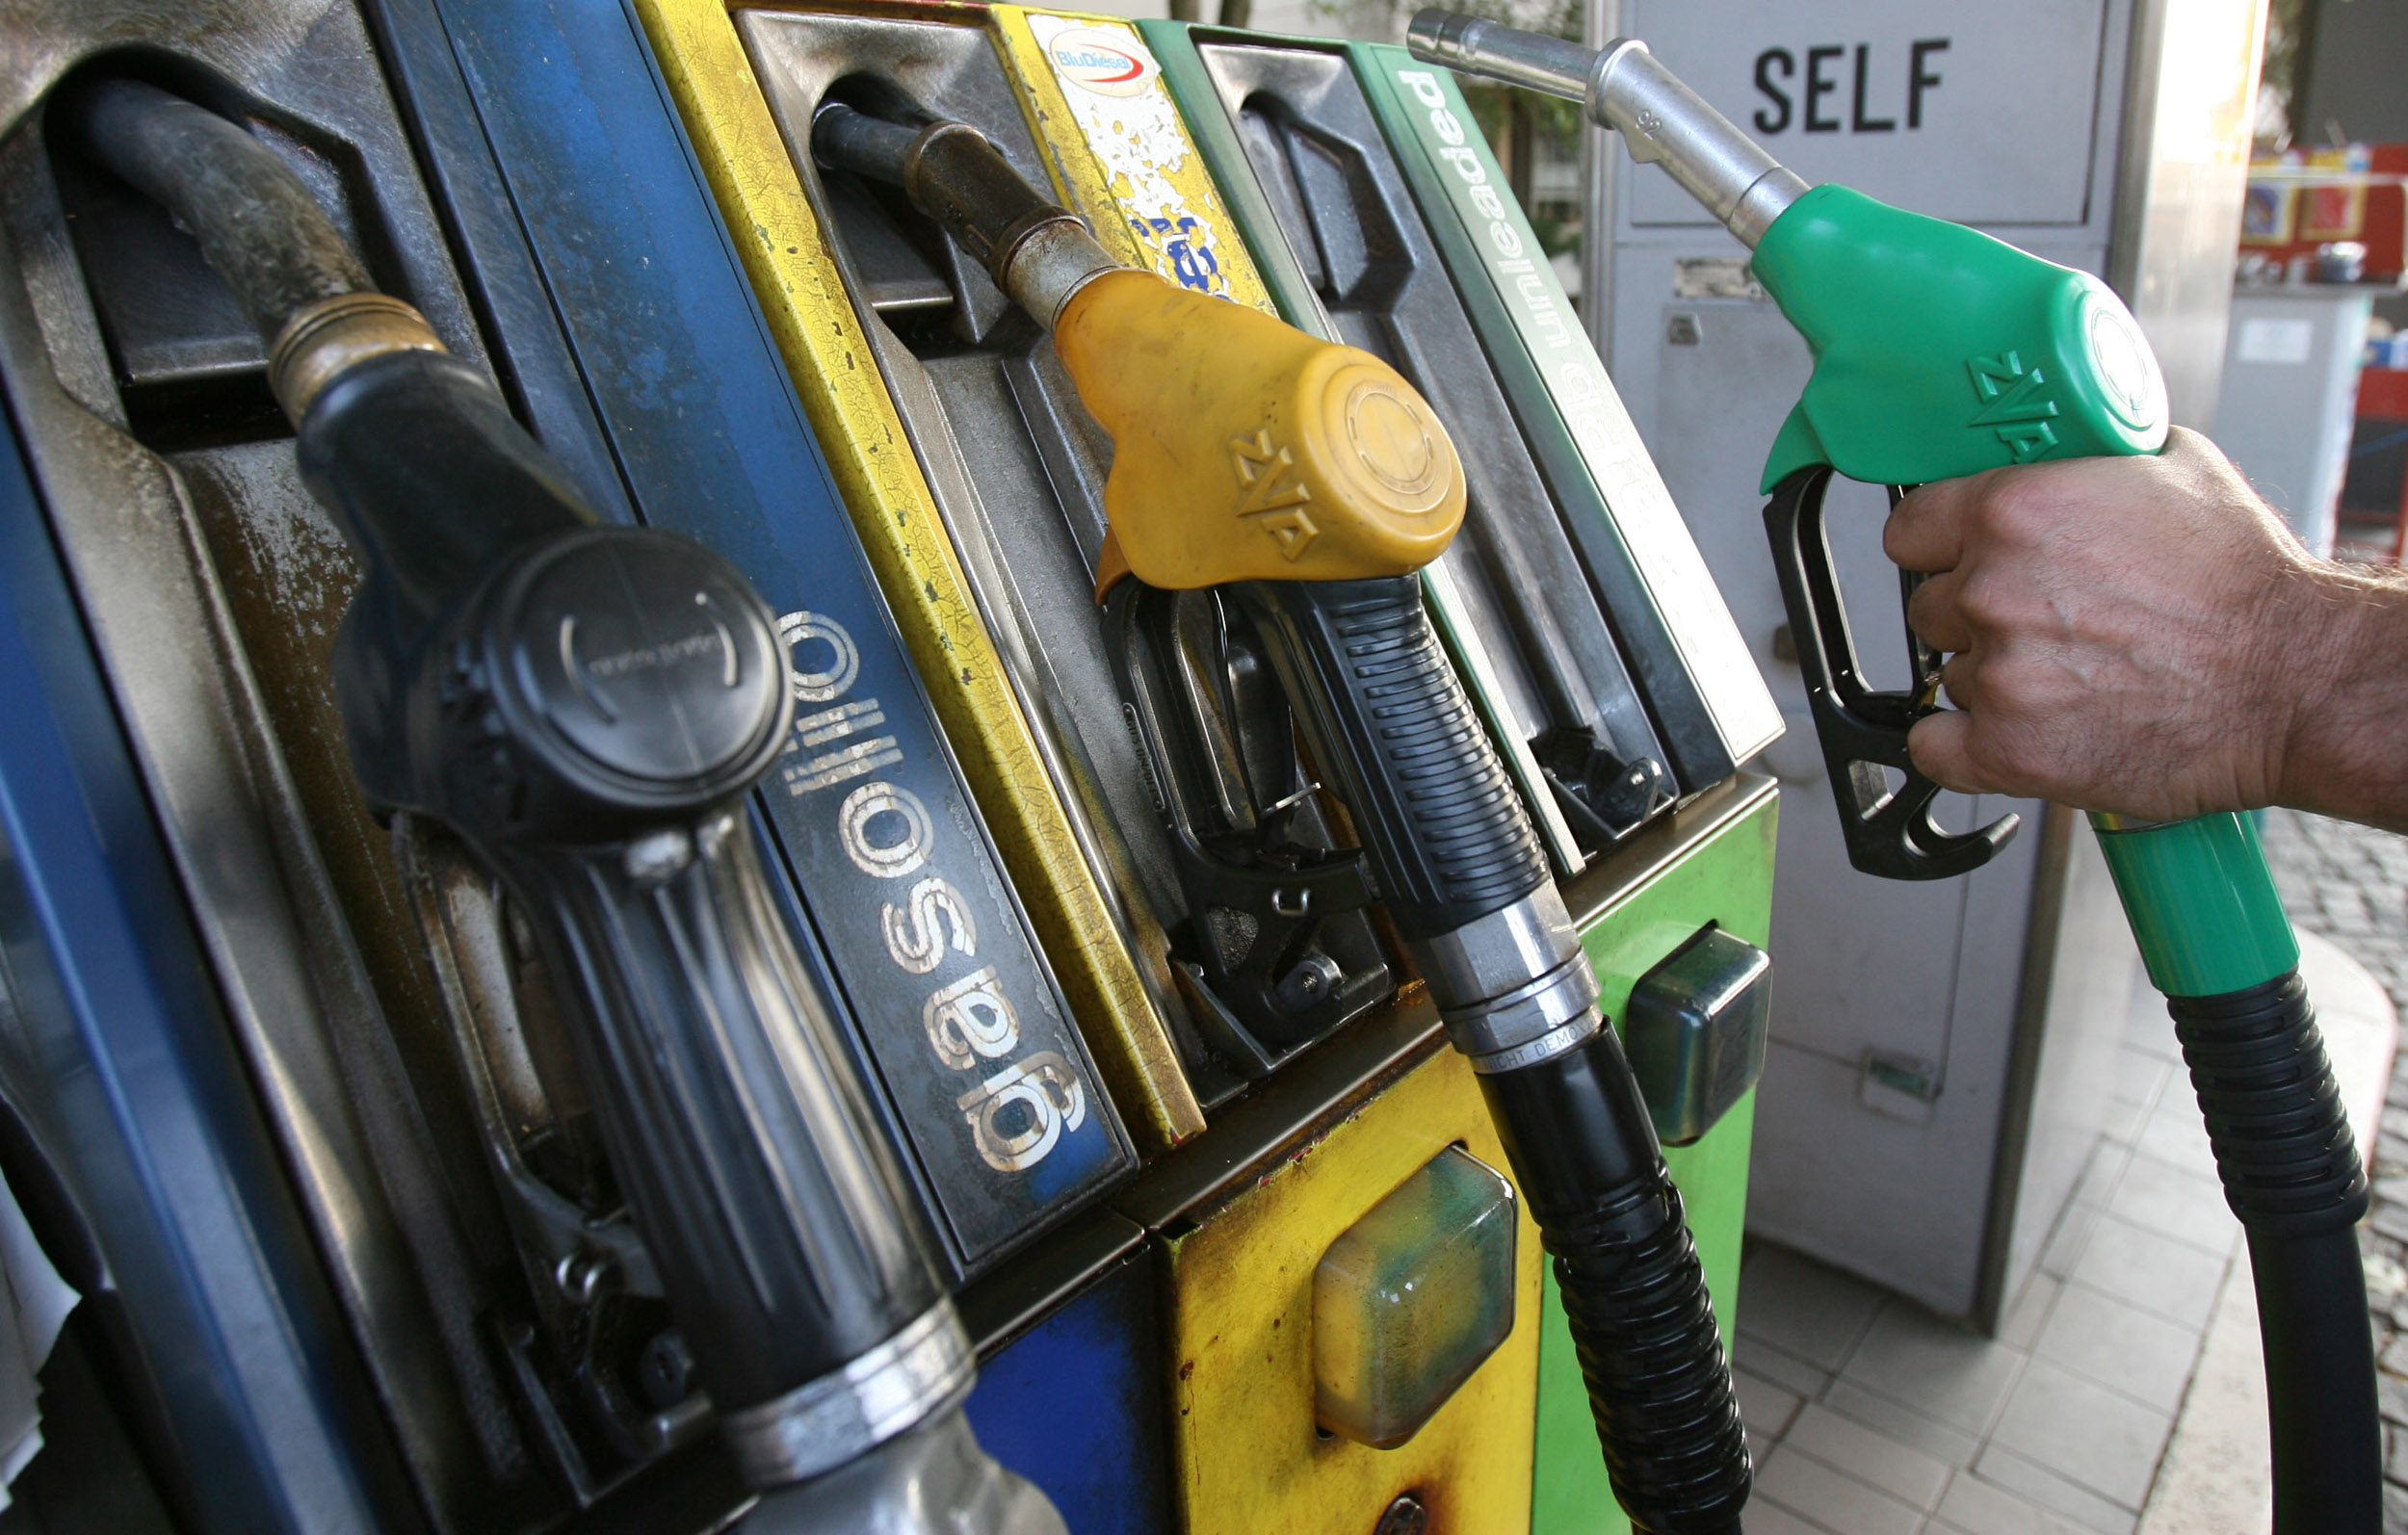 Rincari benzina, UNC: “Stangata di Primavera”